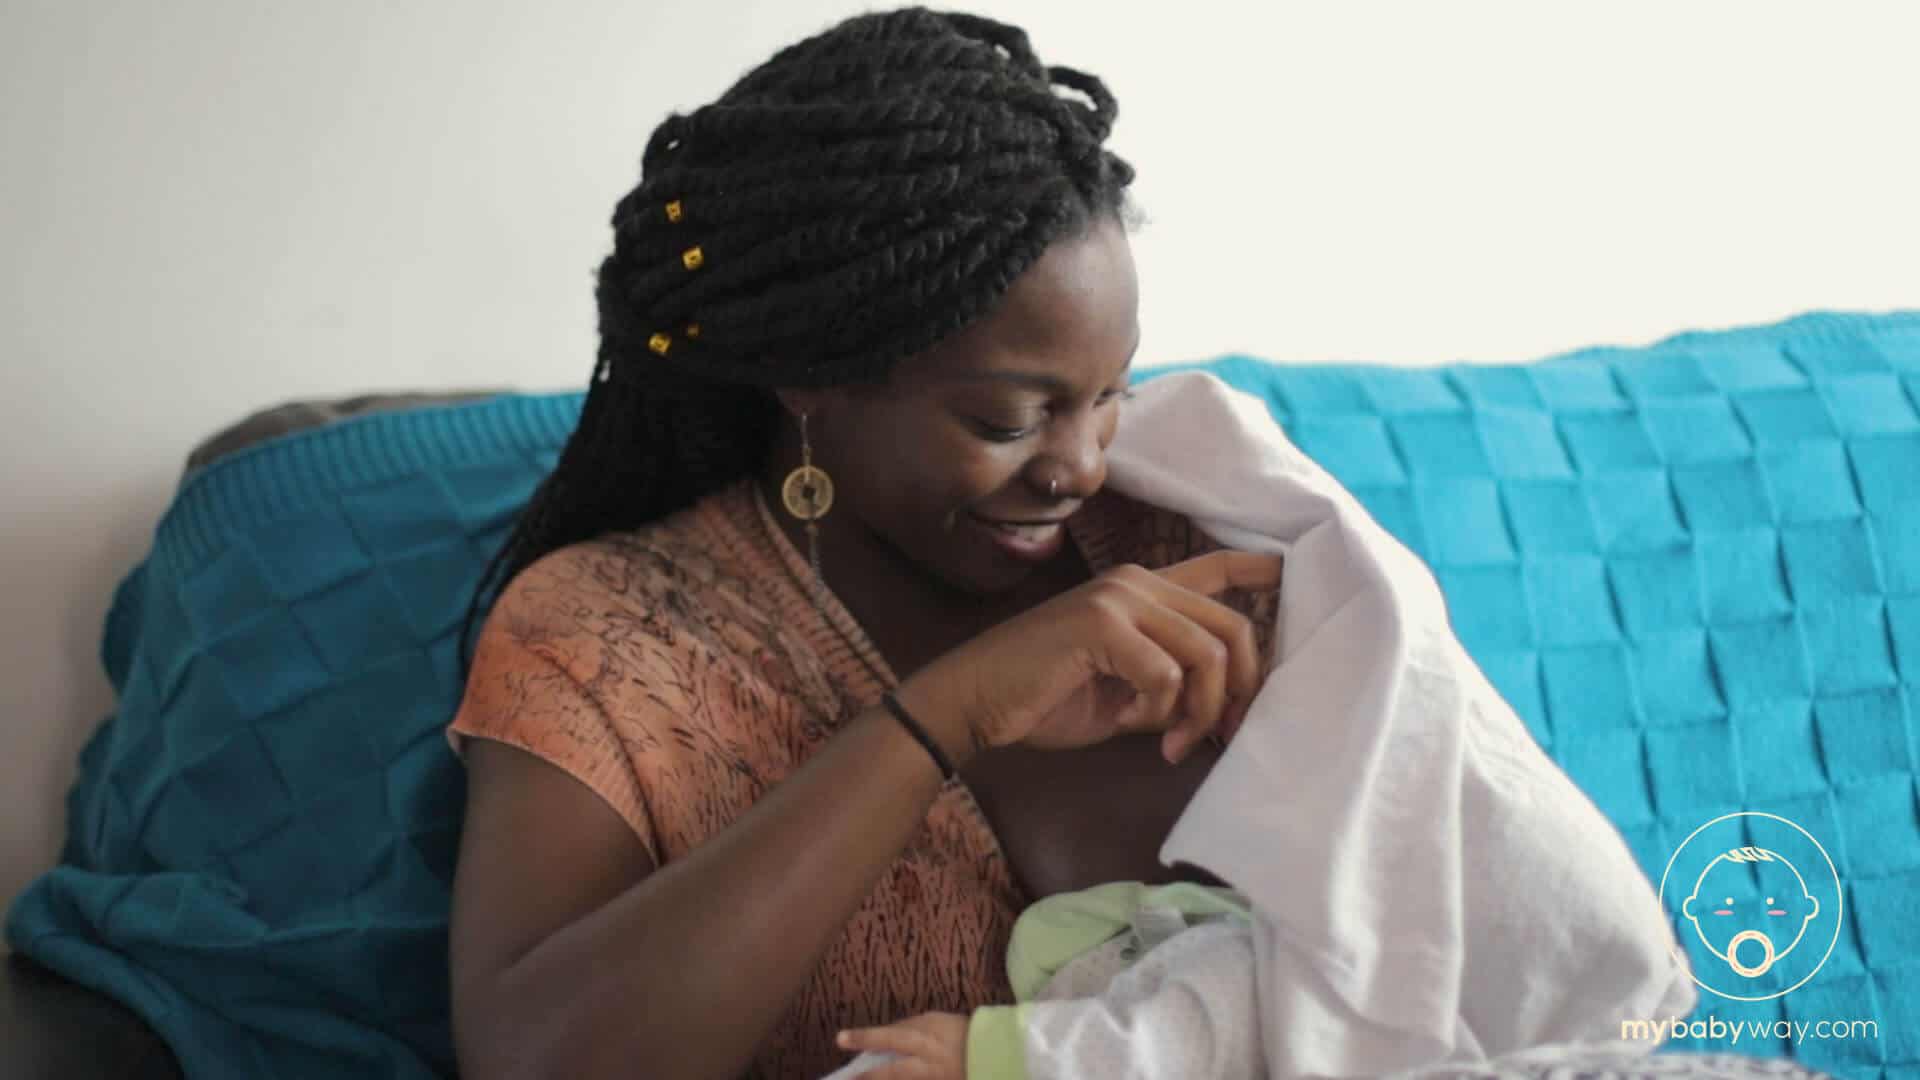 Mother nurses baby under nursing cover.